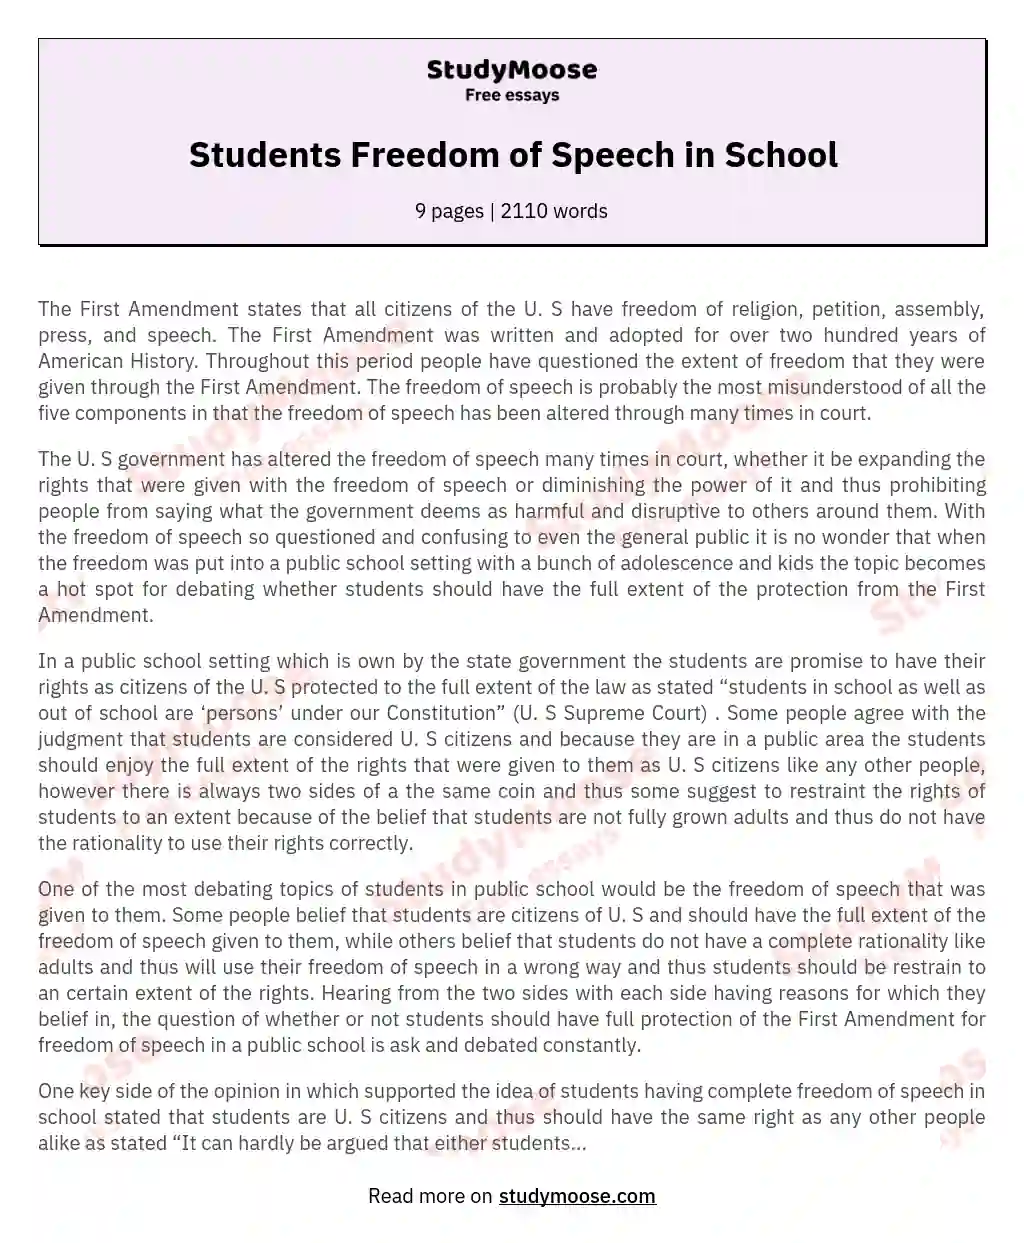 Students Freedom of Speech in School essay